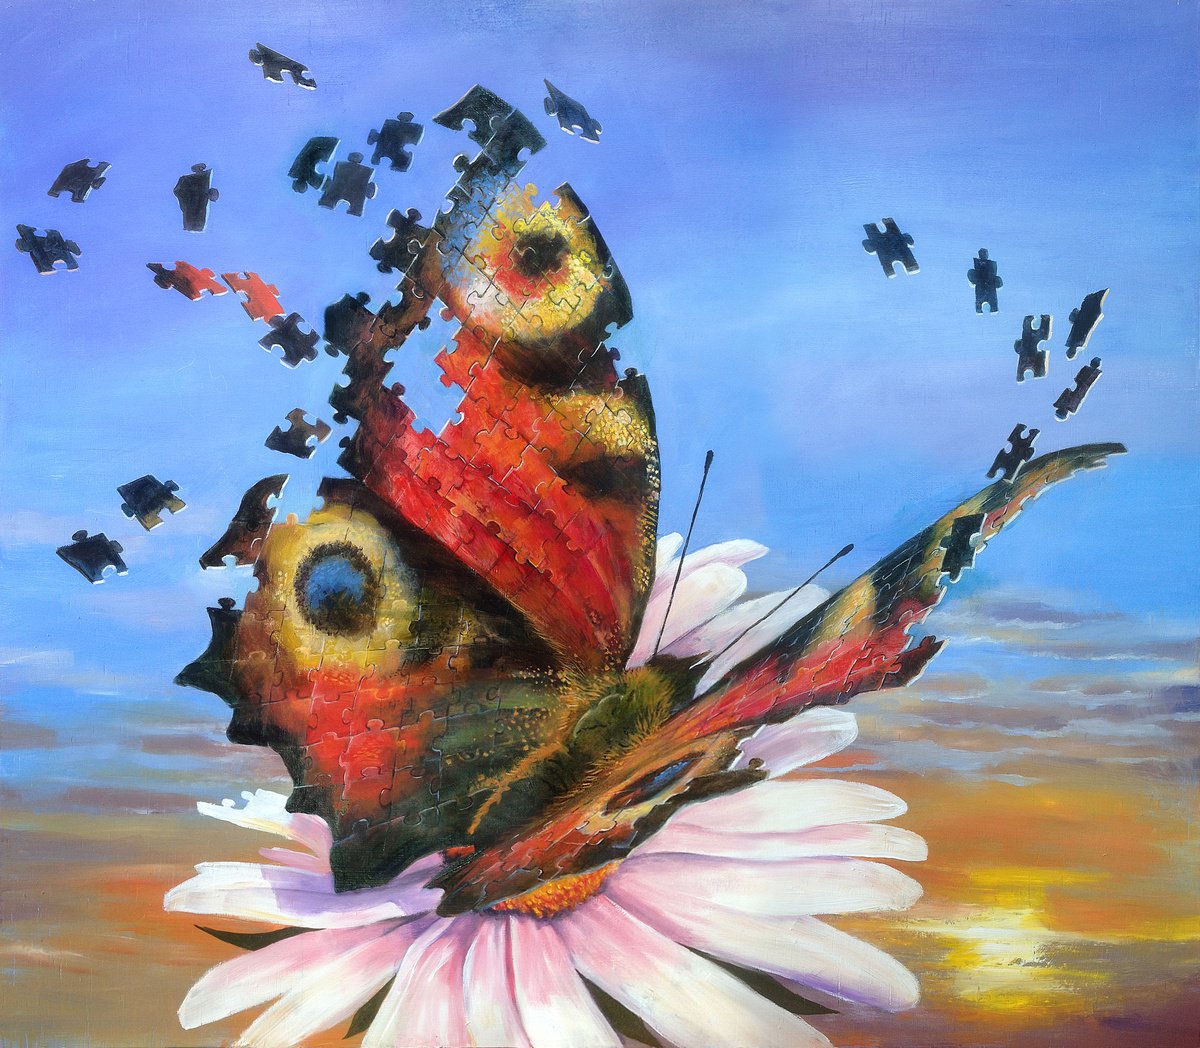 In Pieces - Butterfly Effect by Daniel Loveday